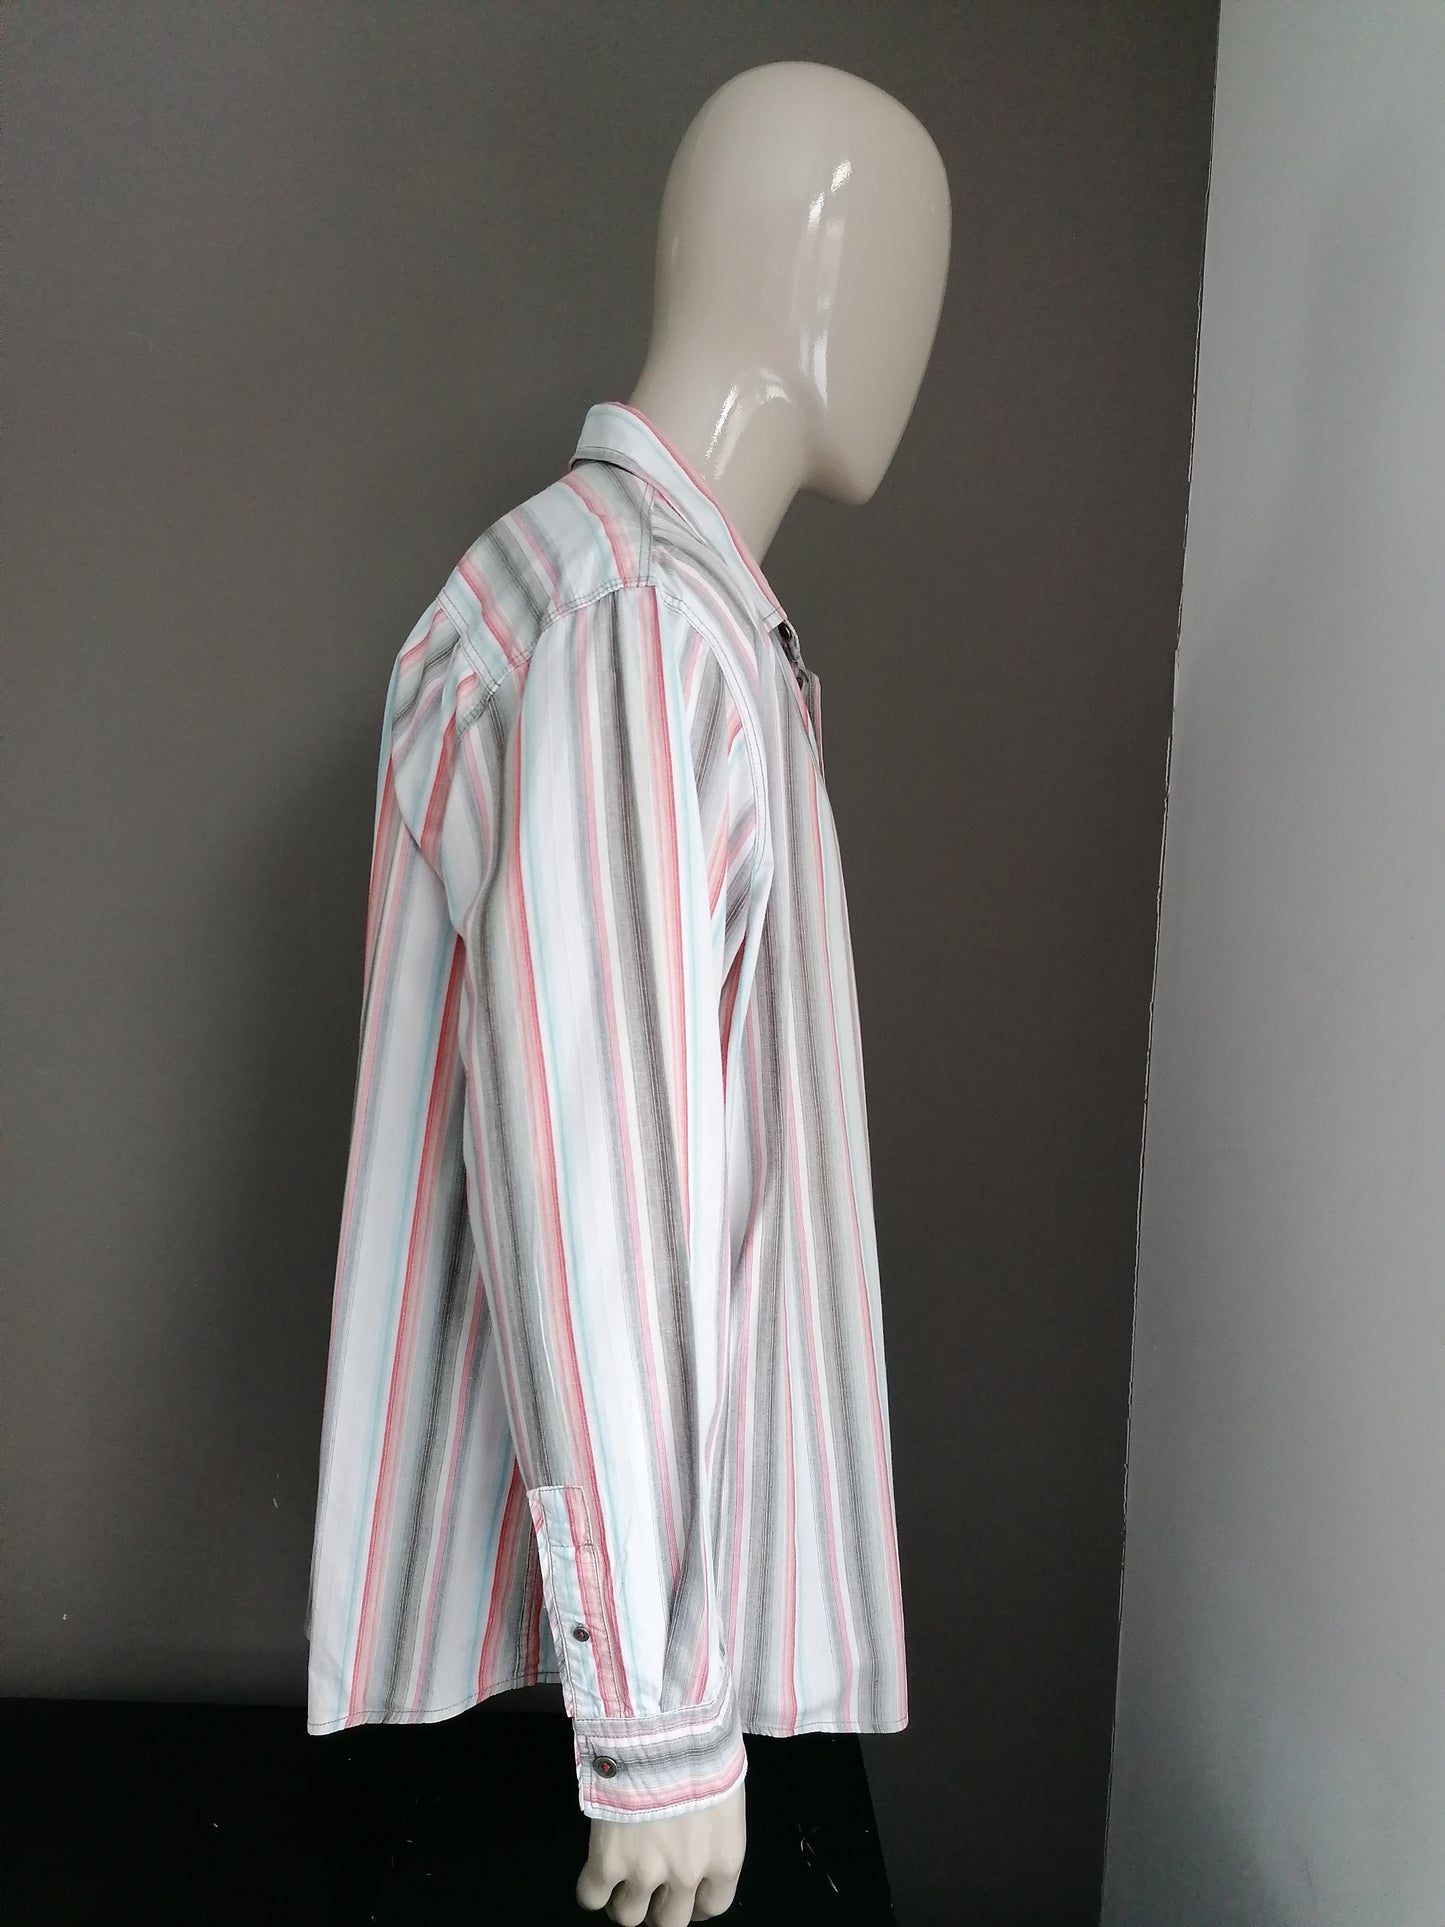 Mantray shirt. Red gray blue white striped. Size XXXL / 3XL.